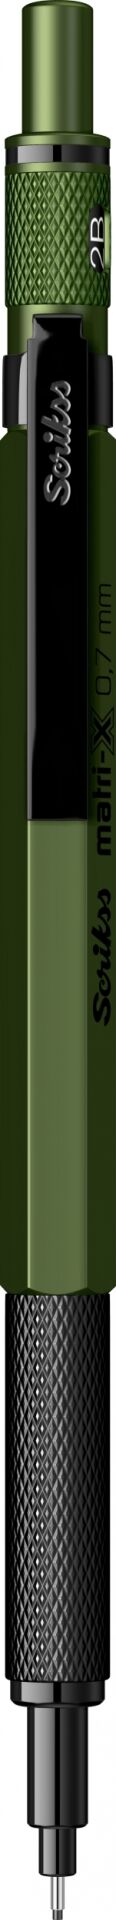 Scrikss Matri-x 0.7 Mekanik Uçlu Kalem - Yeşil